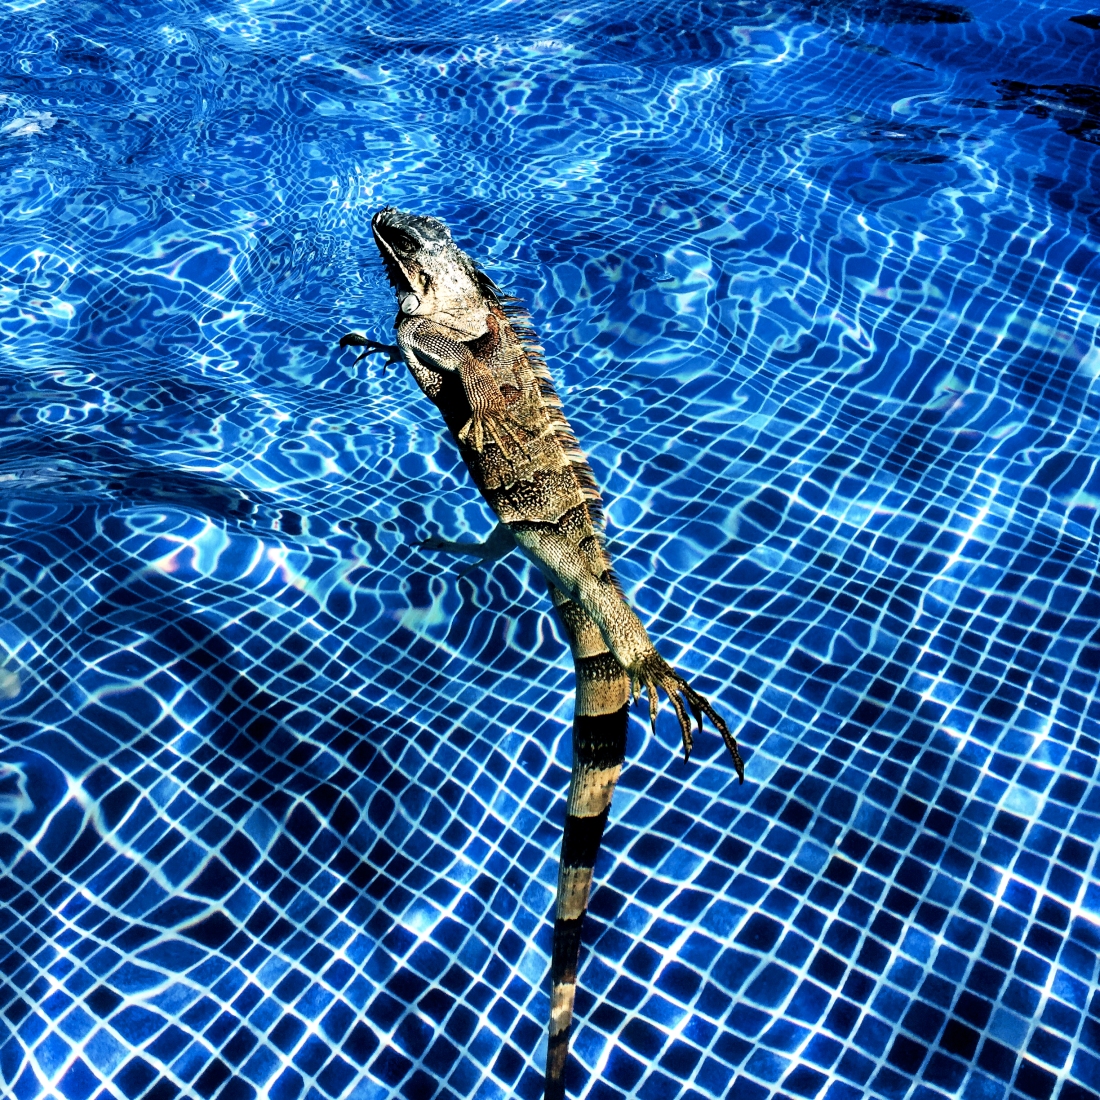 water-dancing-iguana.jpg